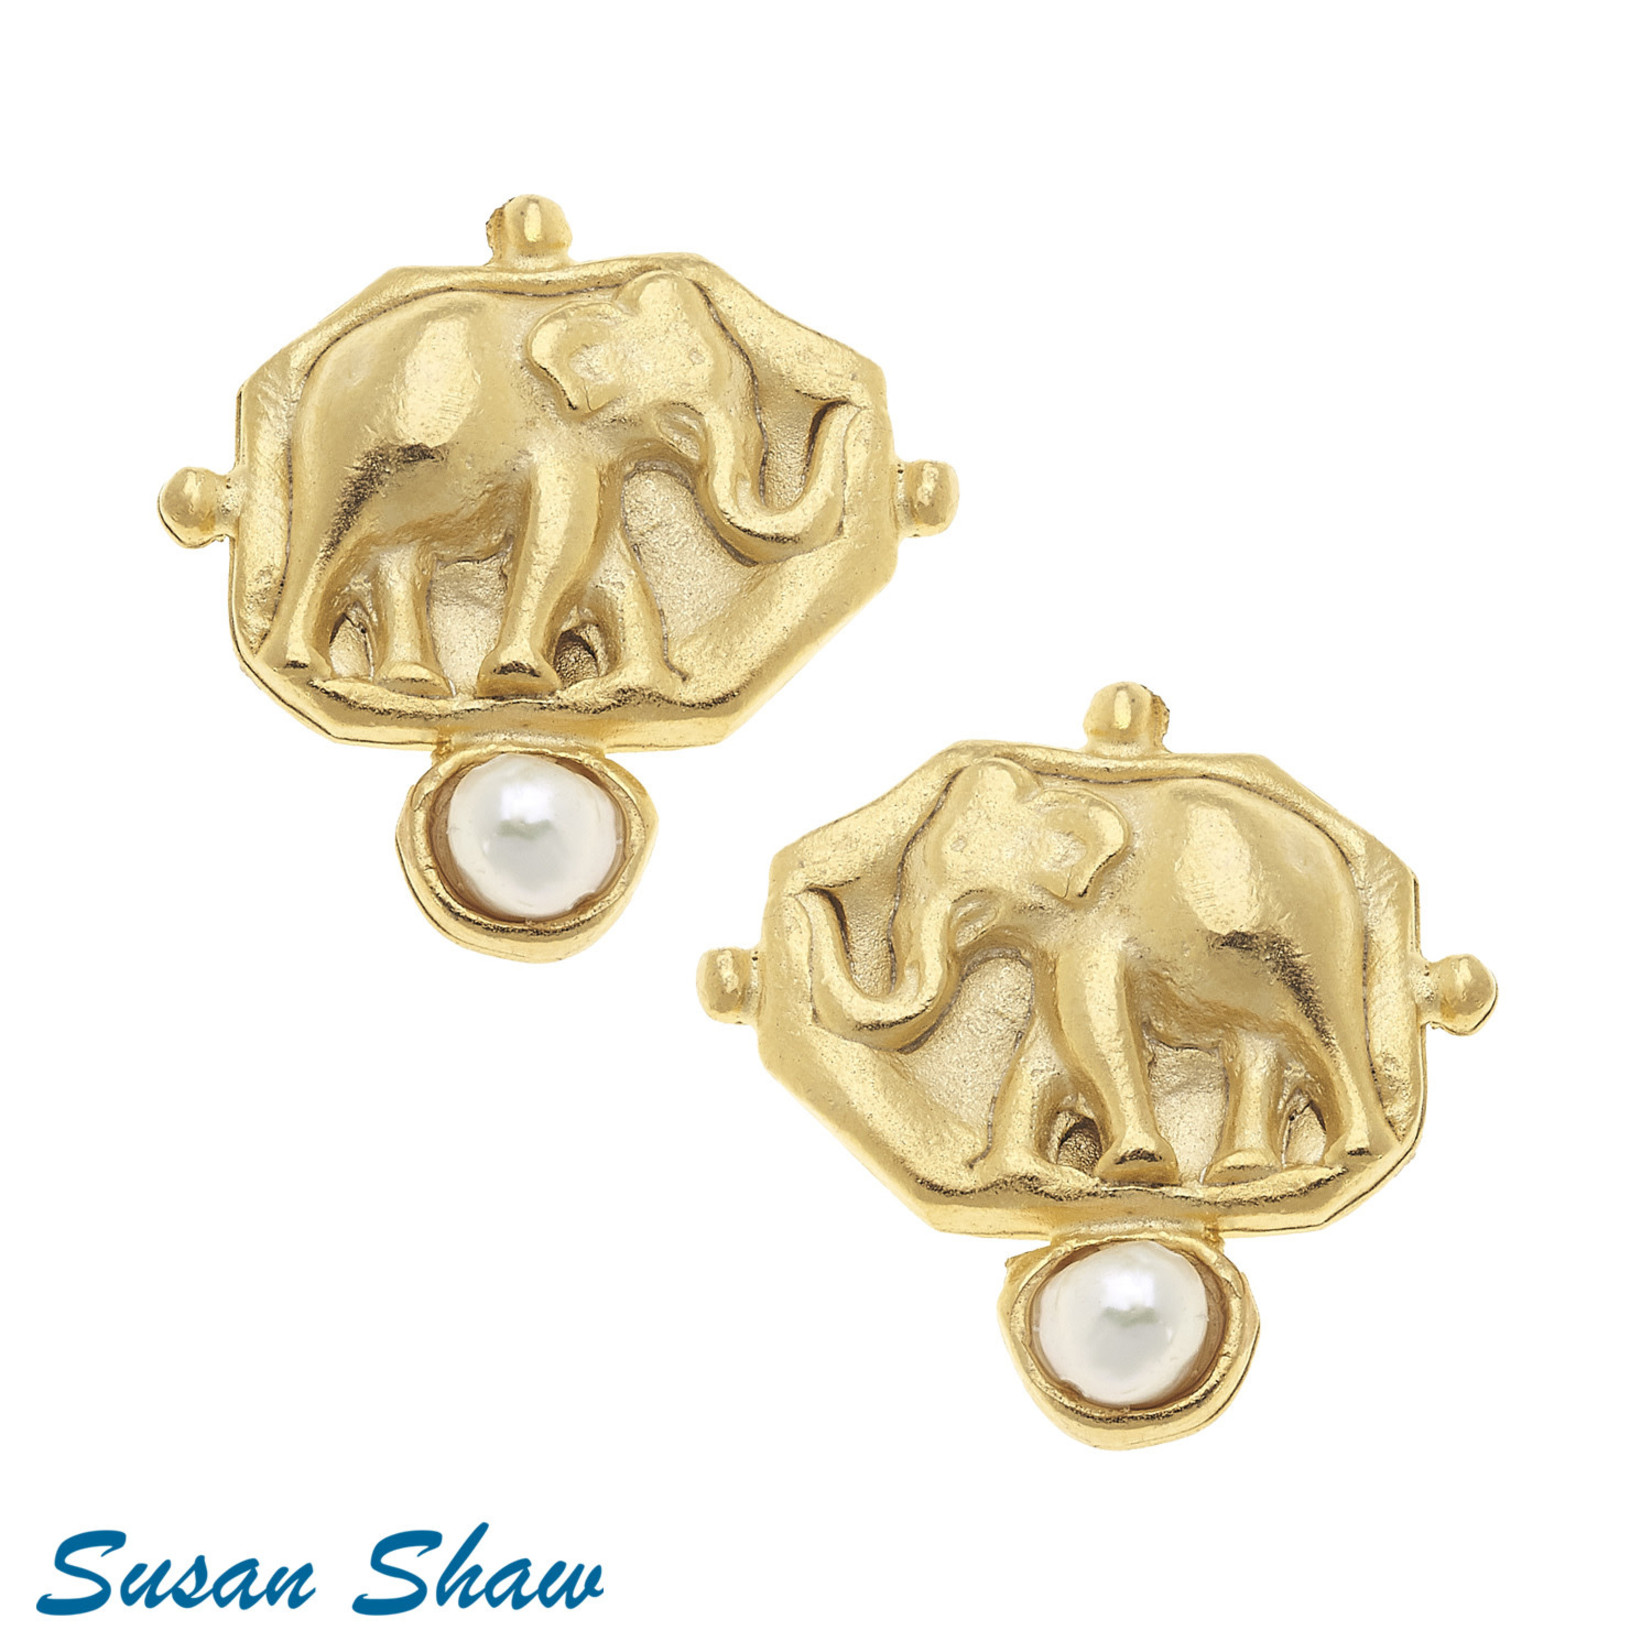 Susan Shaw Susan Shaw Elephant Intaglio Pearl Earrings